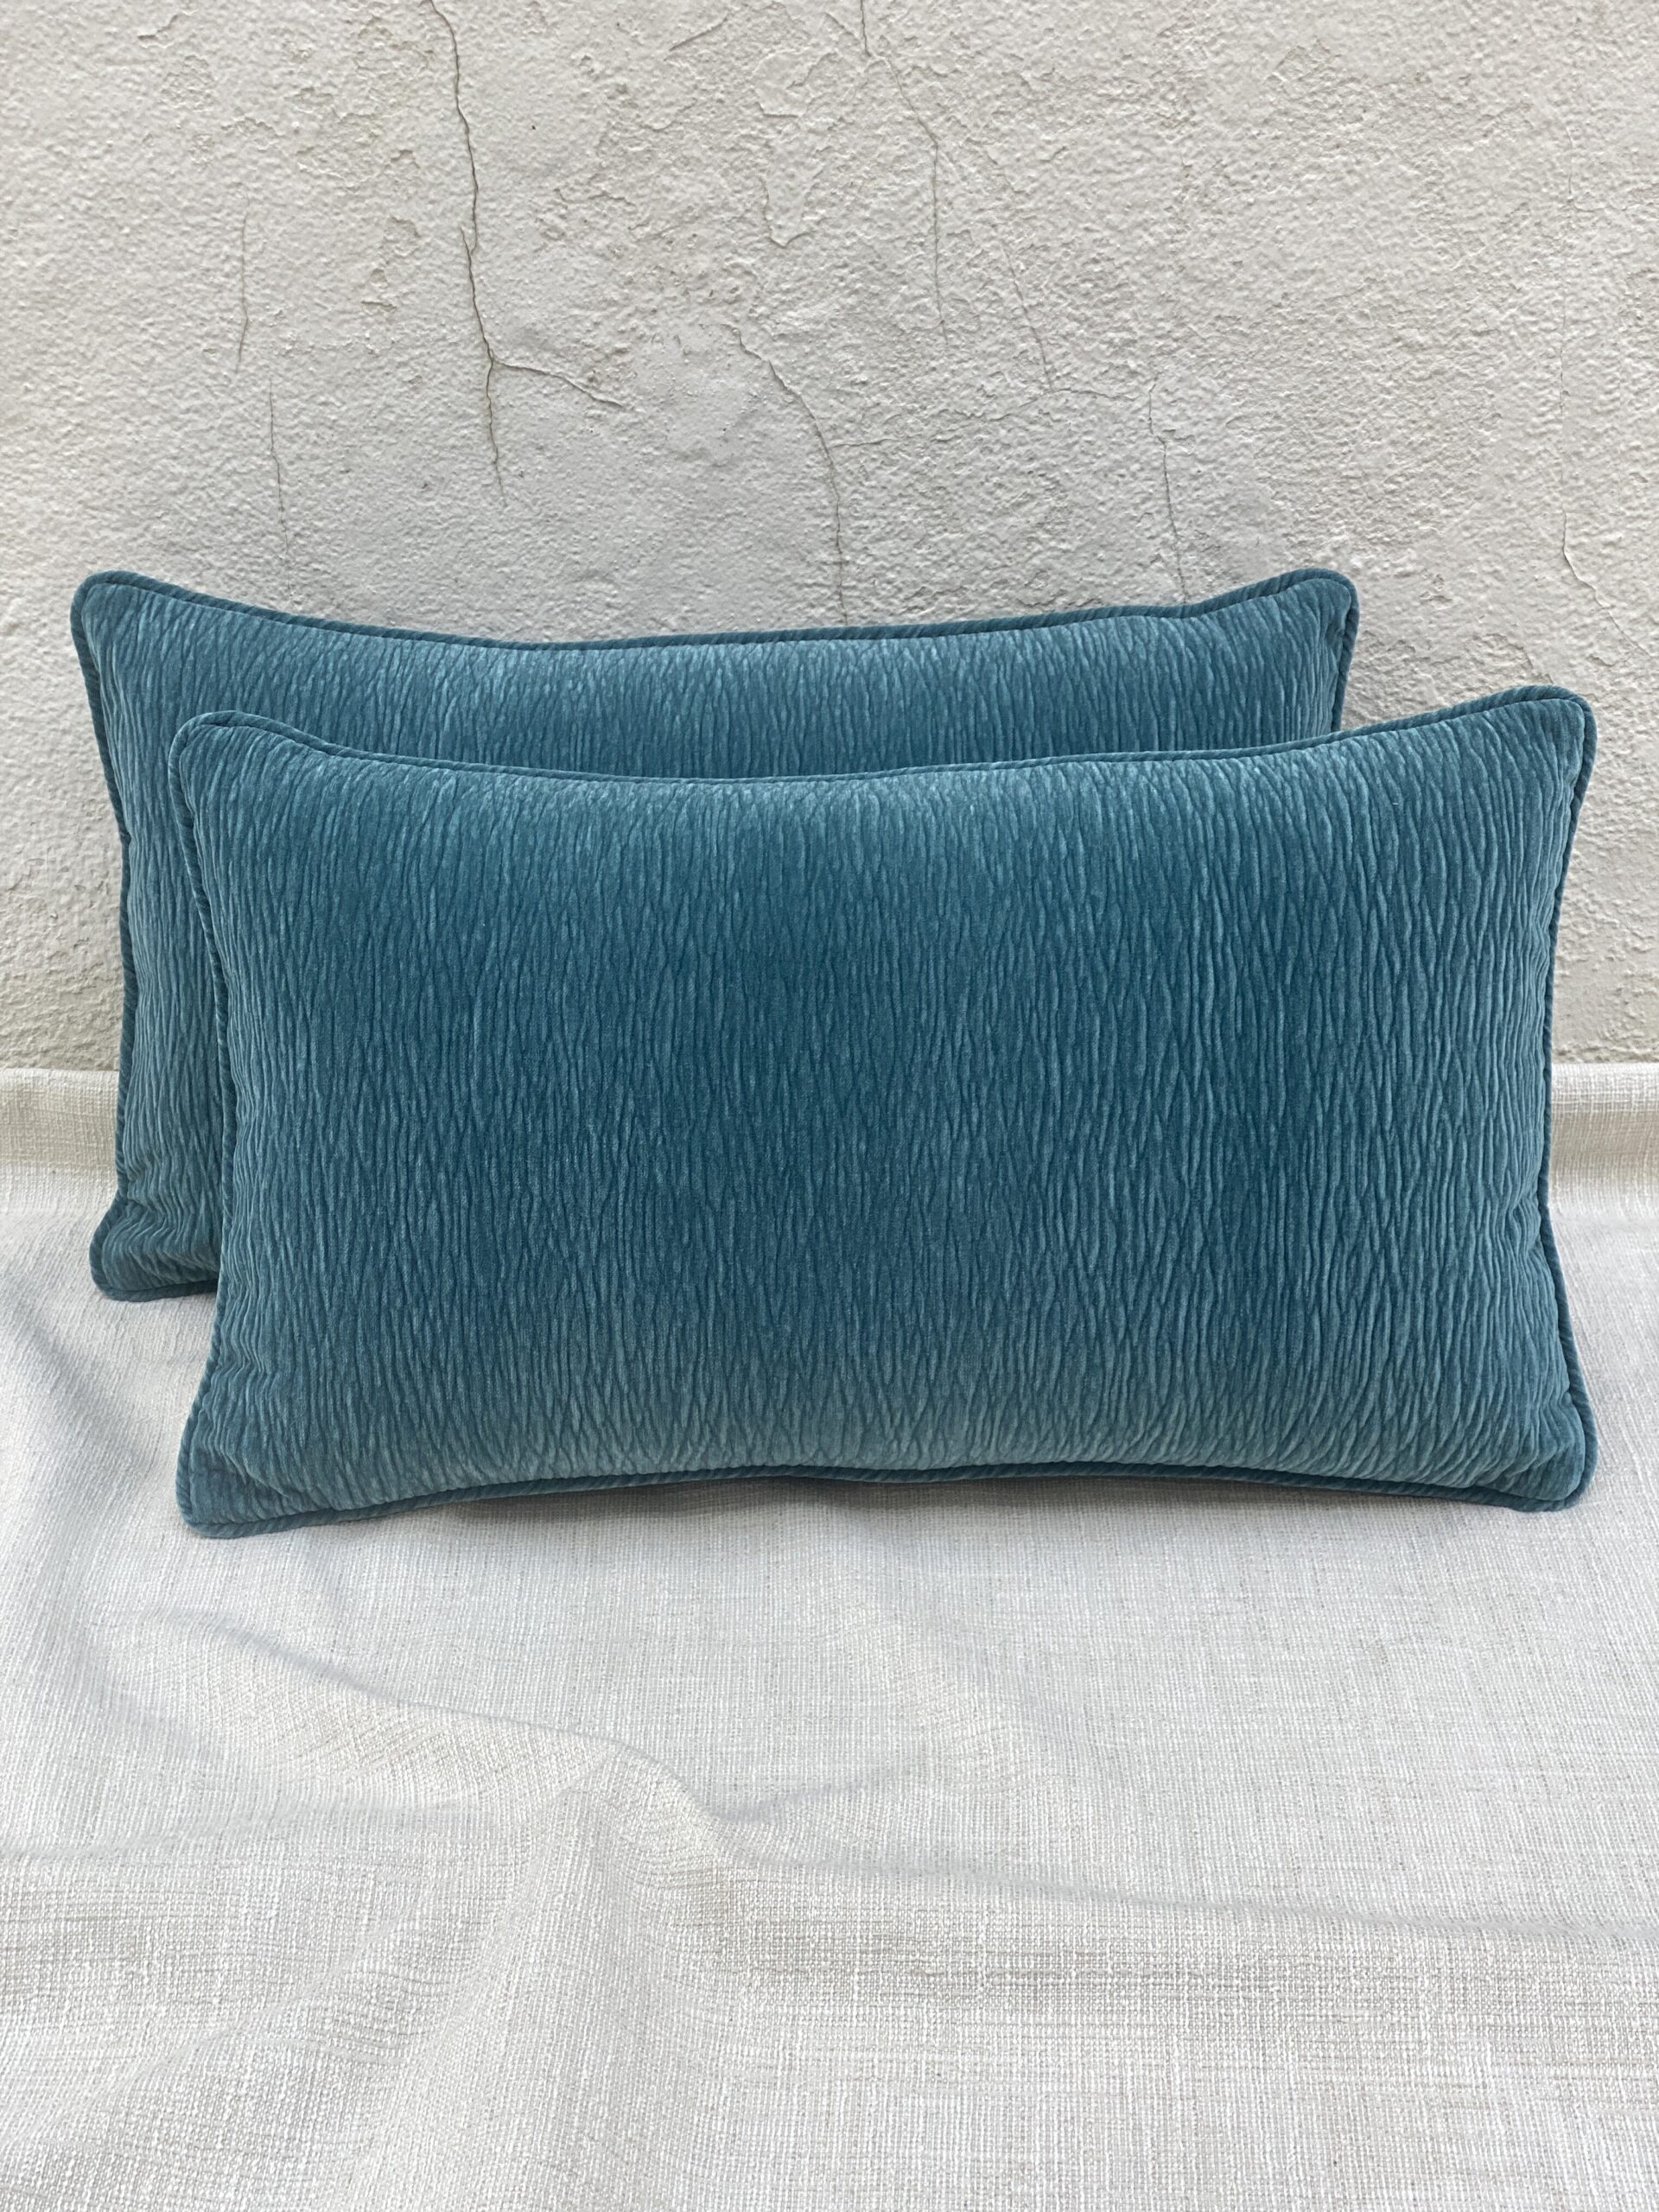 Blue Rectangle Pillows